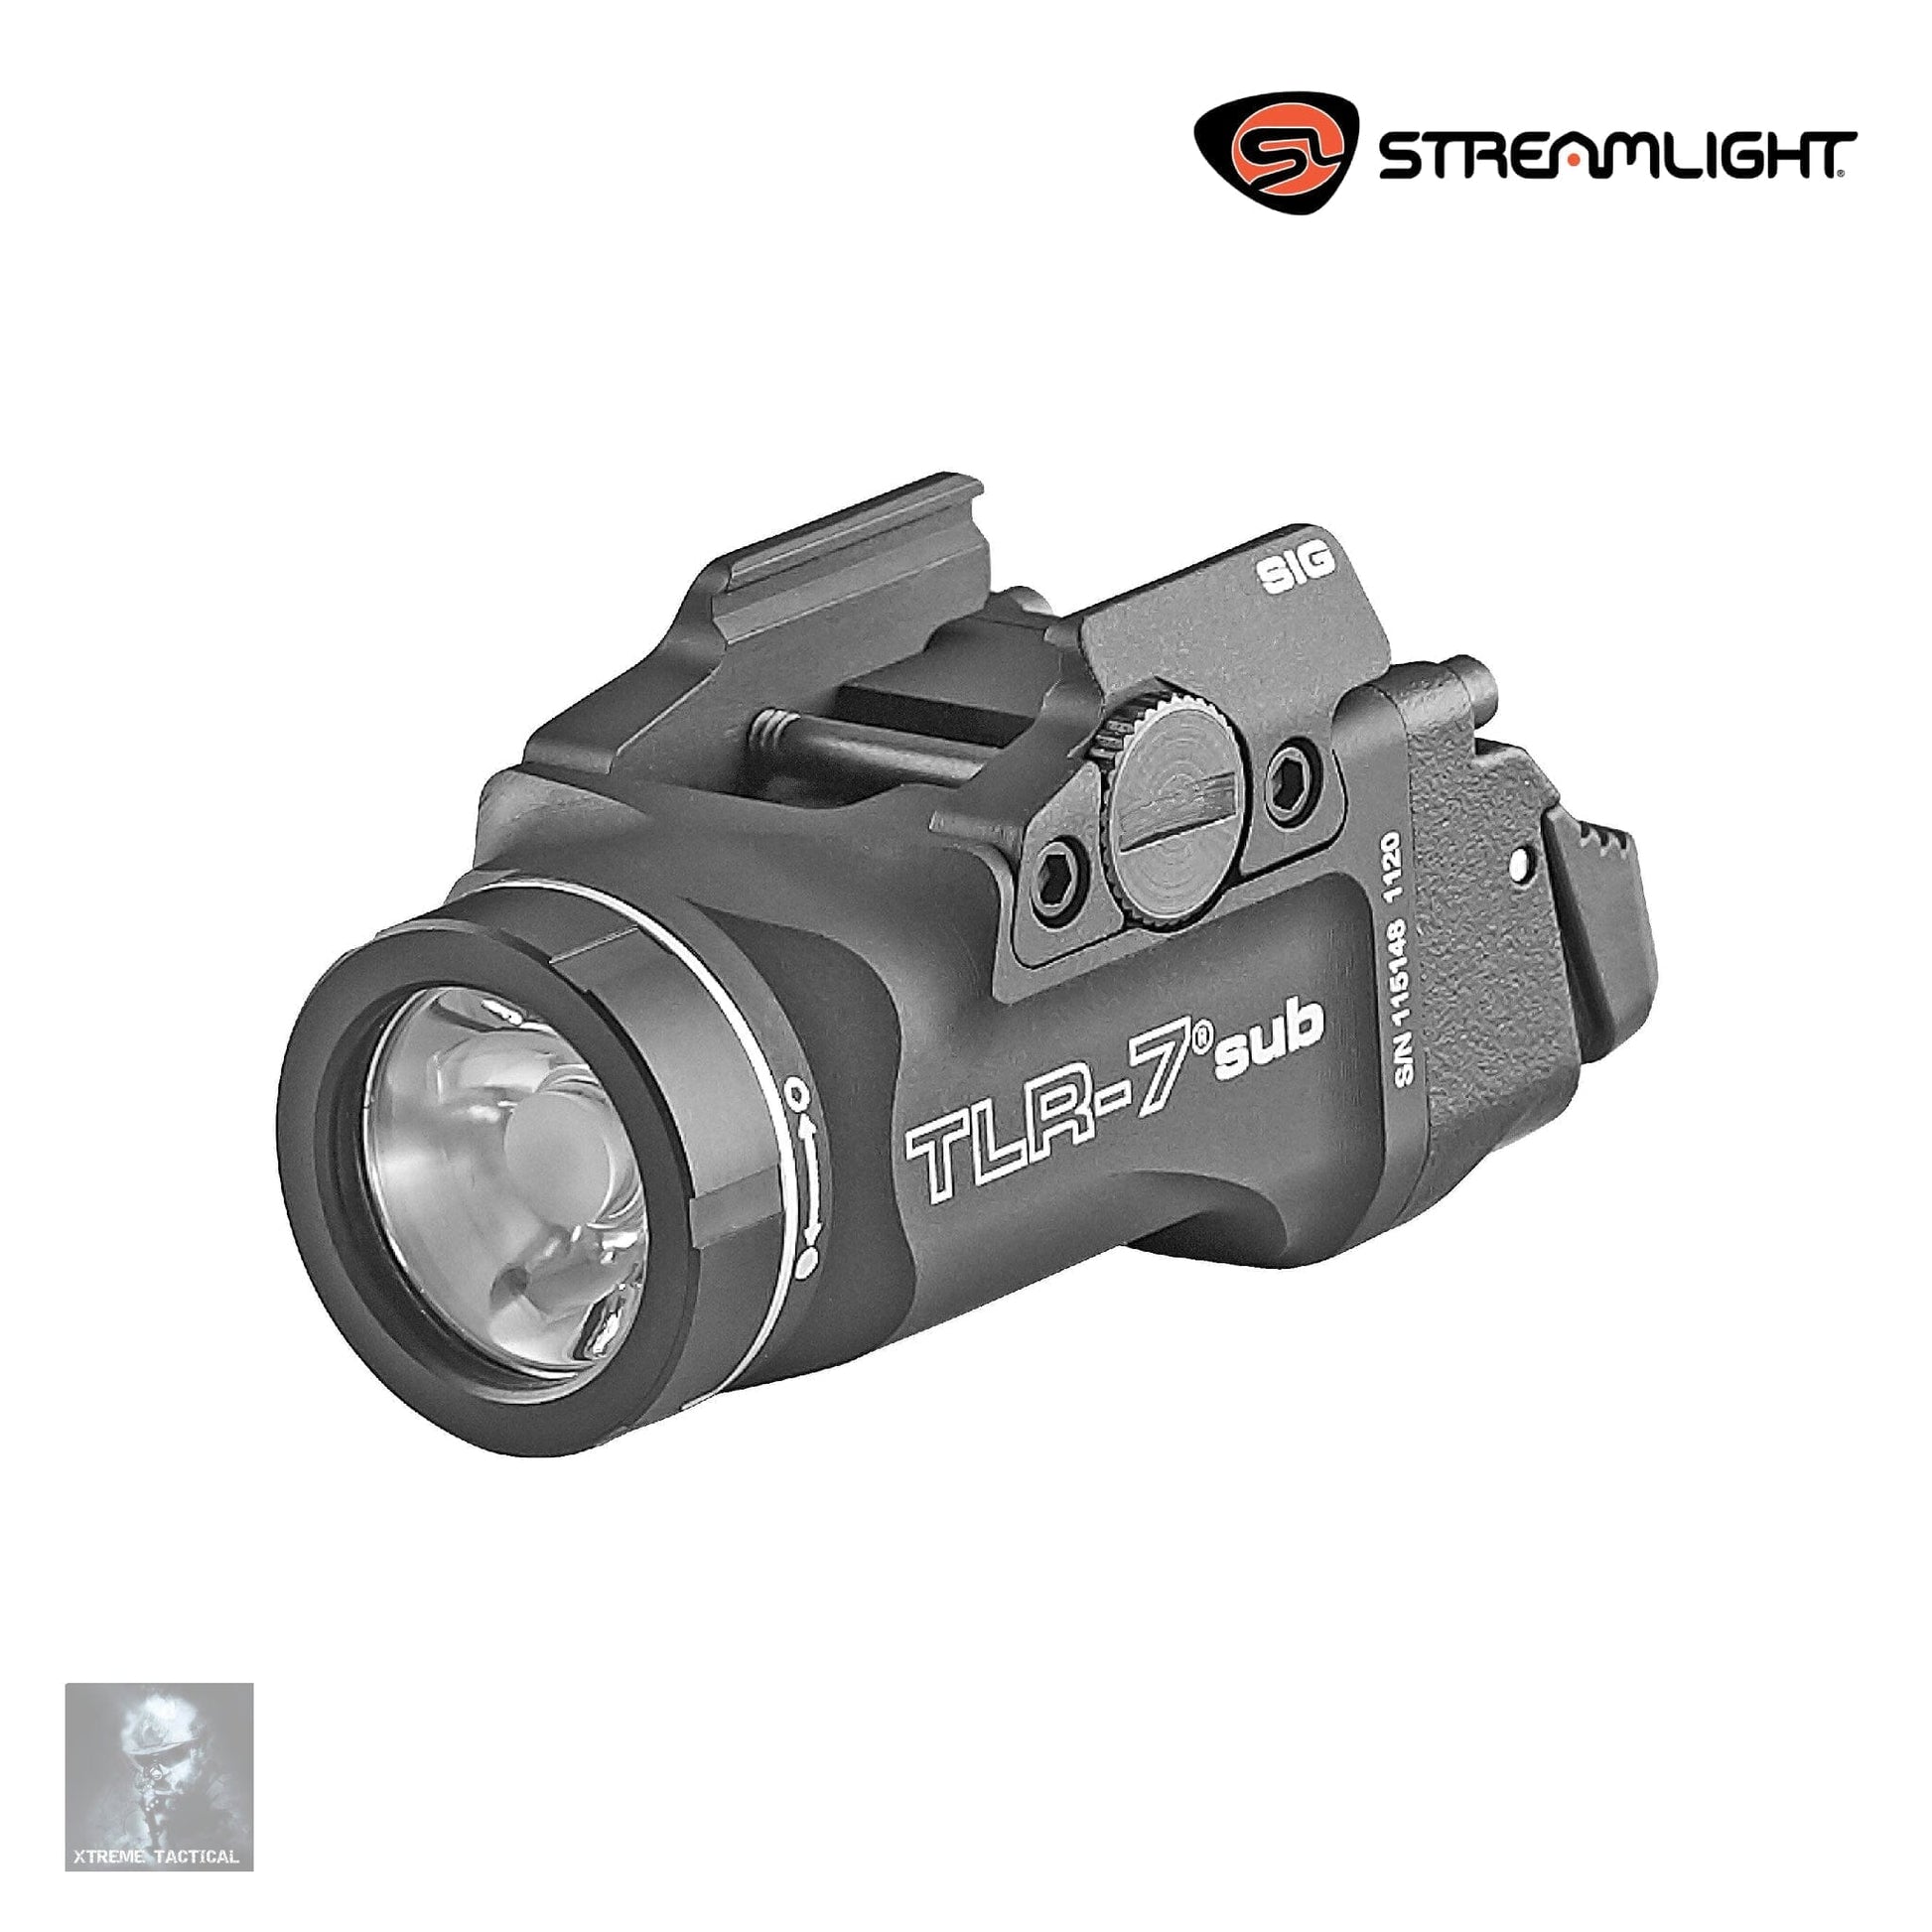 Streamlight TLR-7 Sub Weapon Light - SIG Sauer P365 P365 XL - 69401 Weapon Light Streamlight 